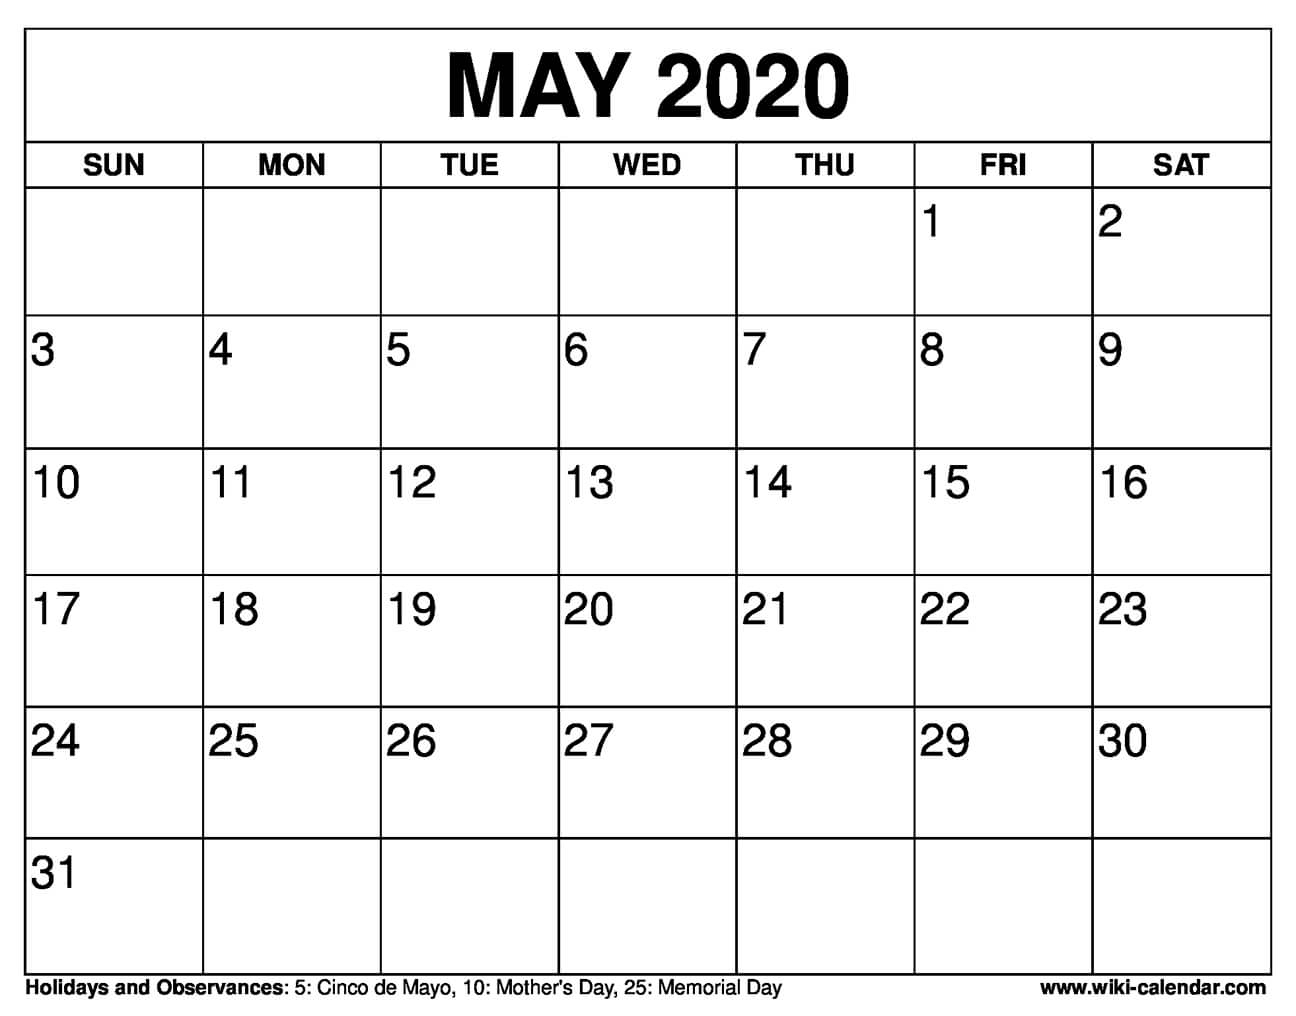 Free Printable May 2020 Calendar - Wiki-Calendar